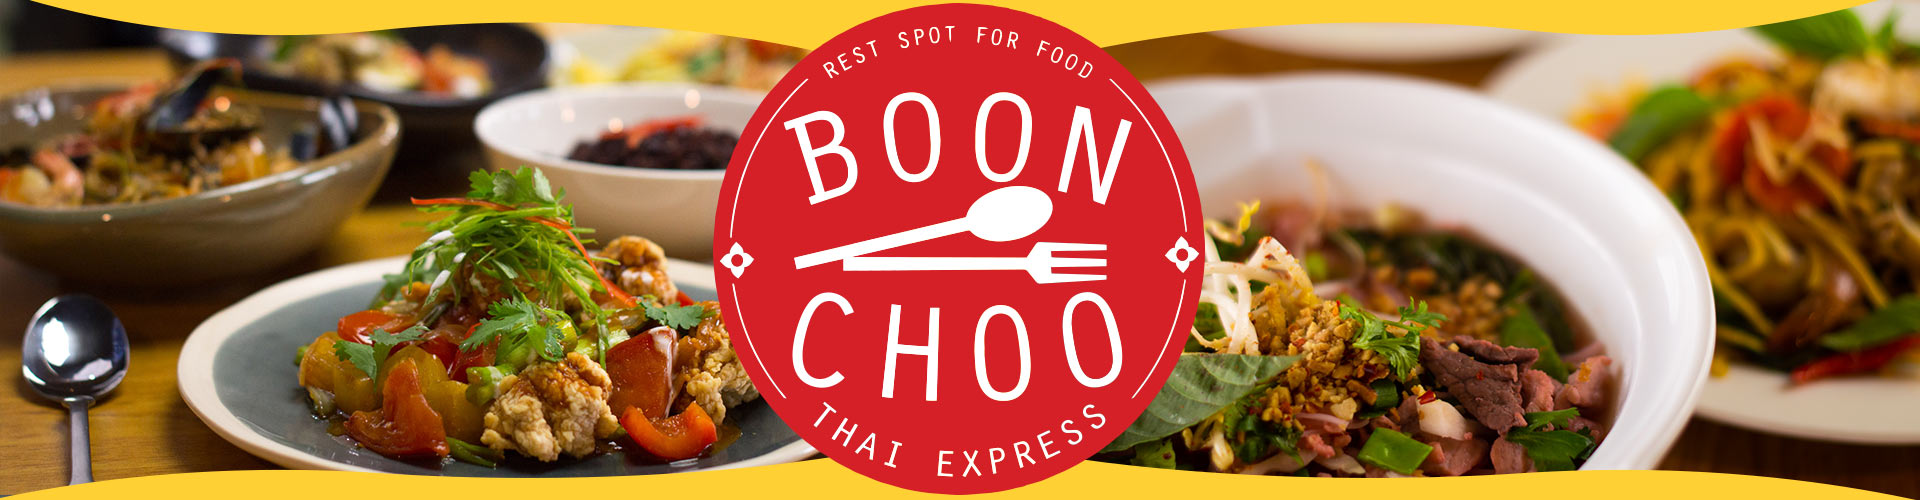 Boonchoo Website | https://boonchoothai.com/